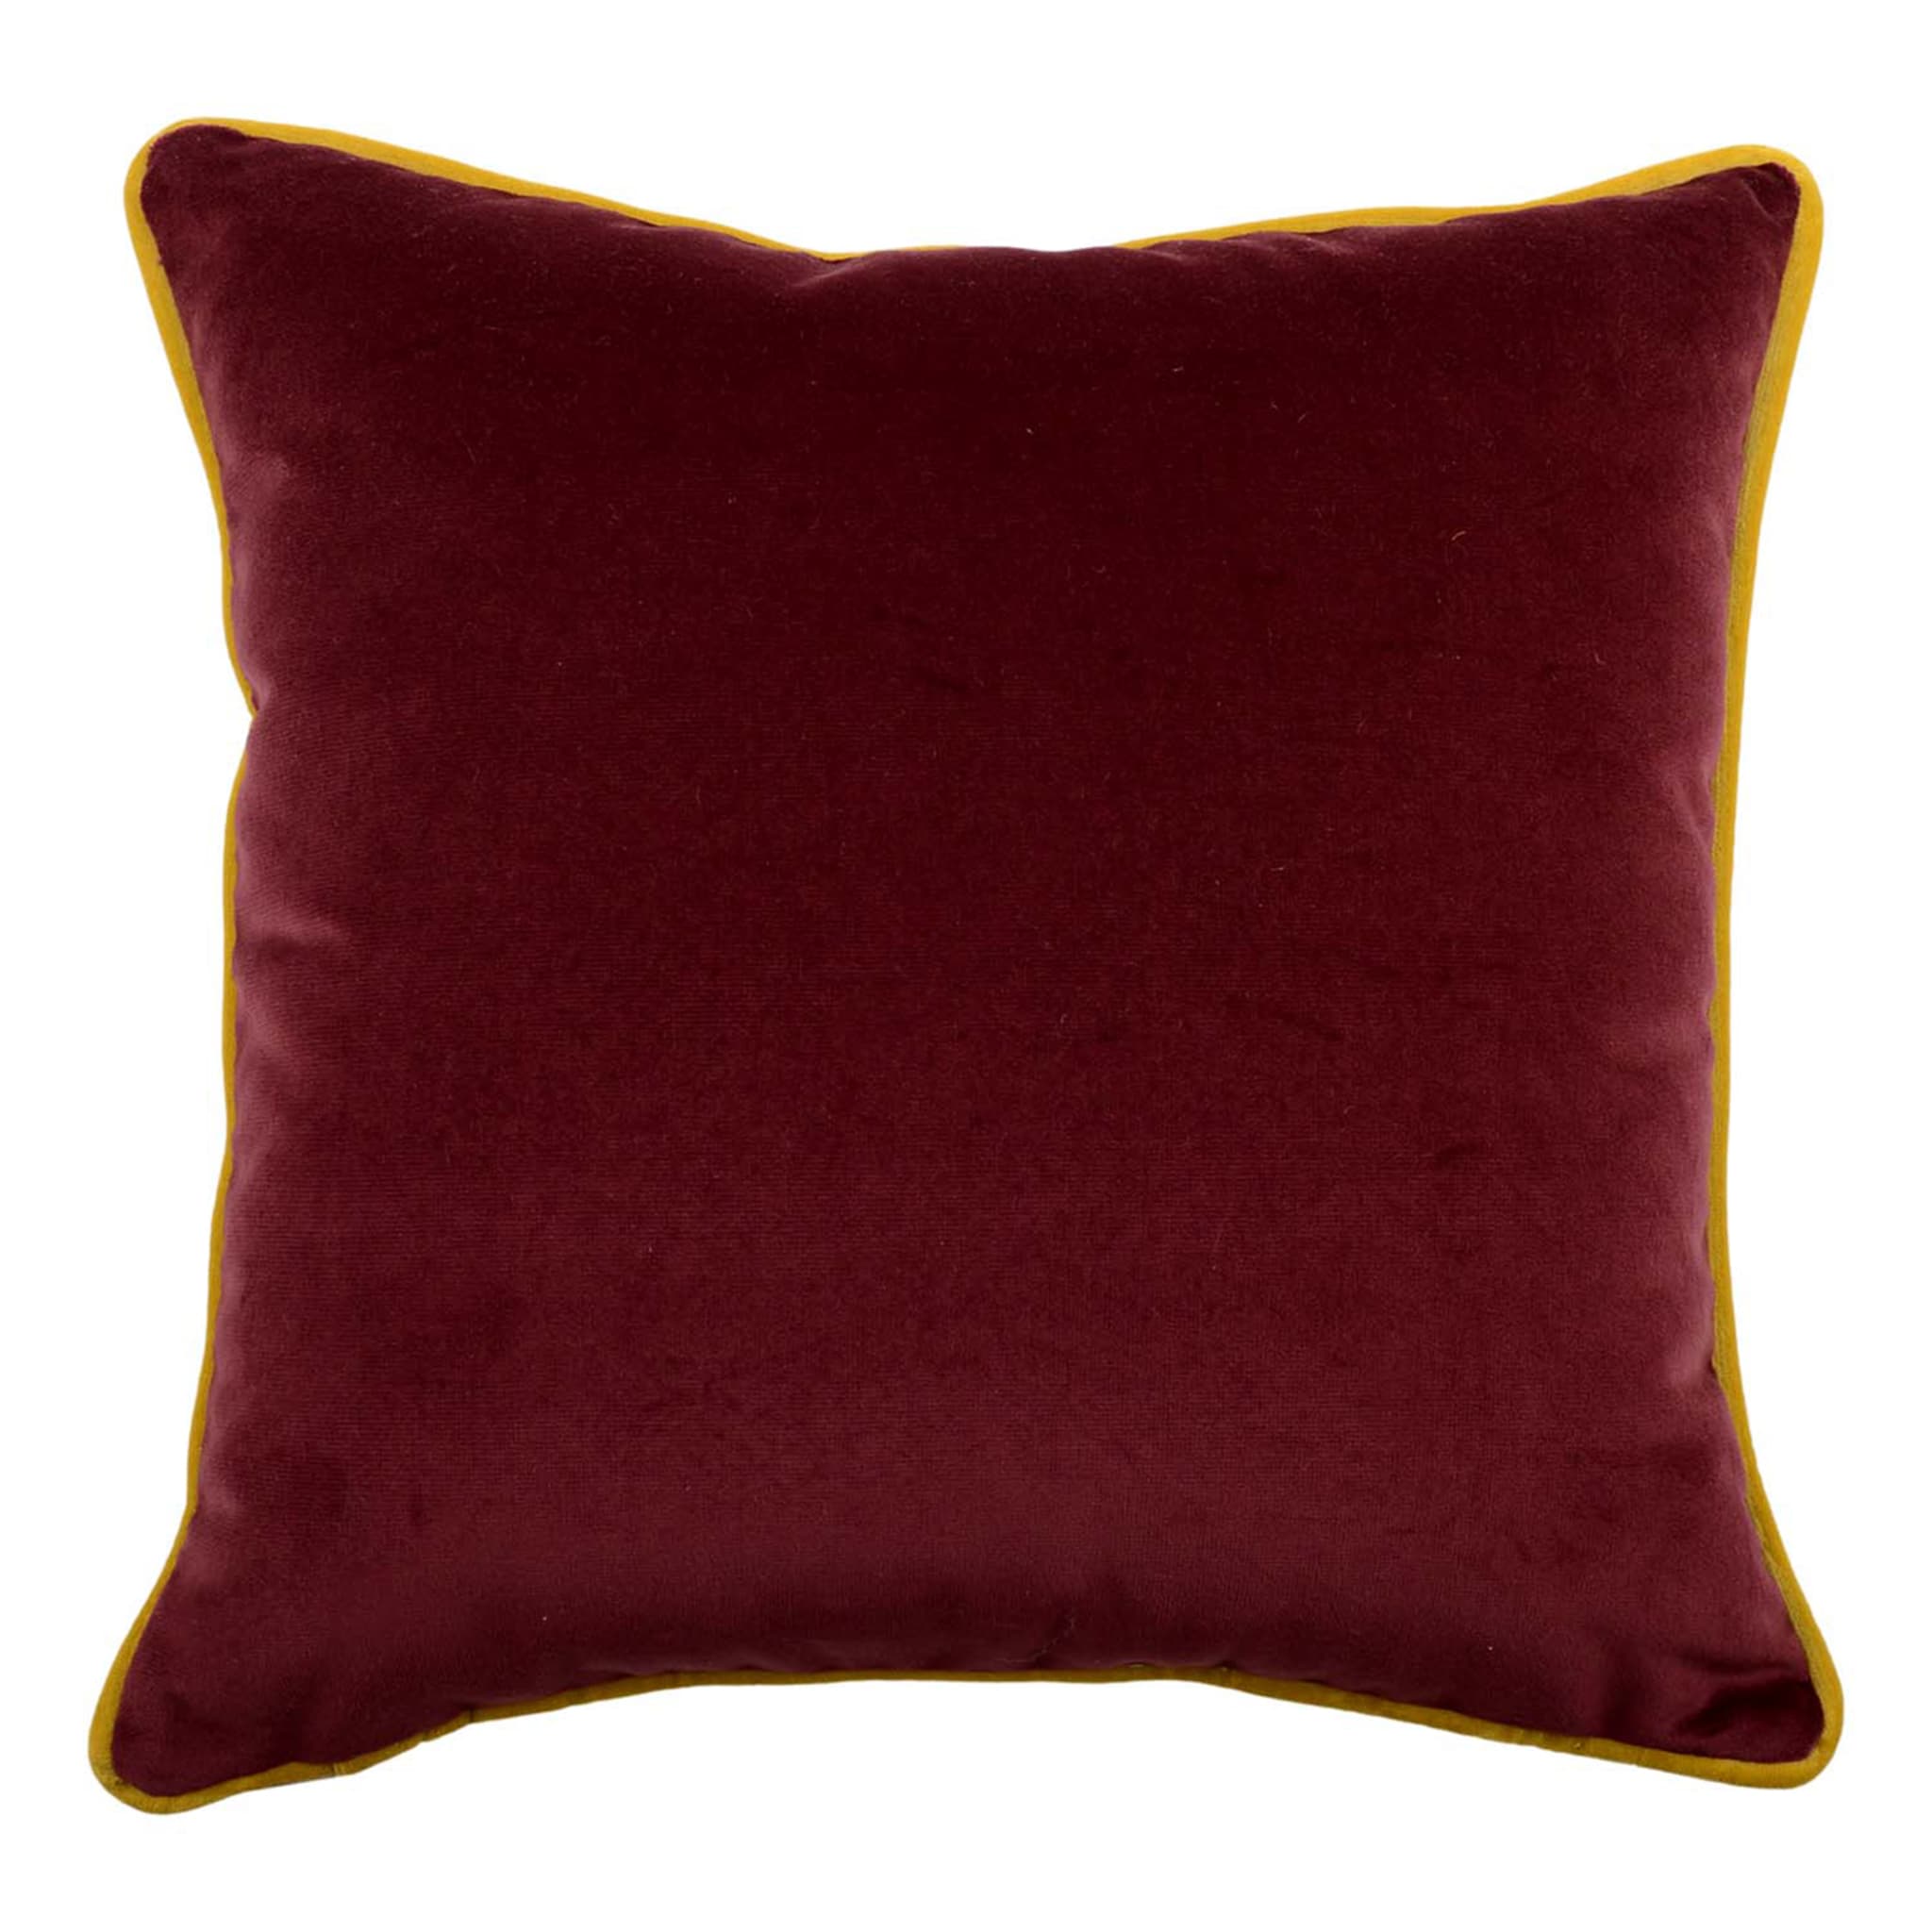 Carrè Cushion in Floreal Jacquard Fabric - Alternative view 2